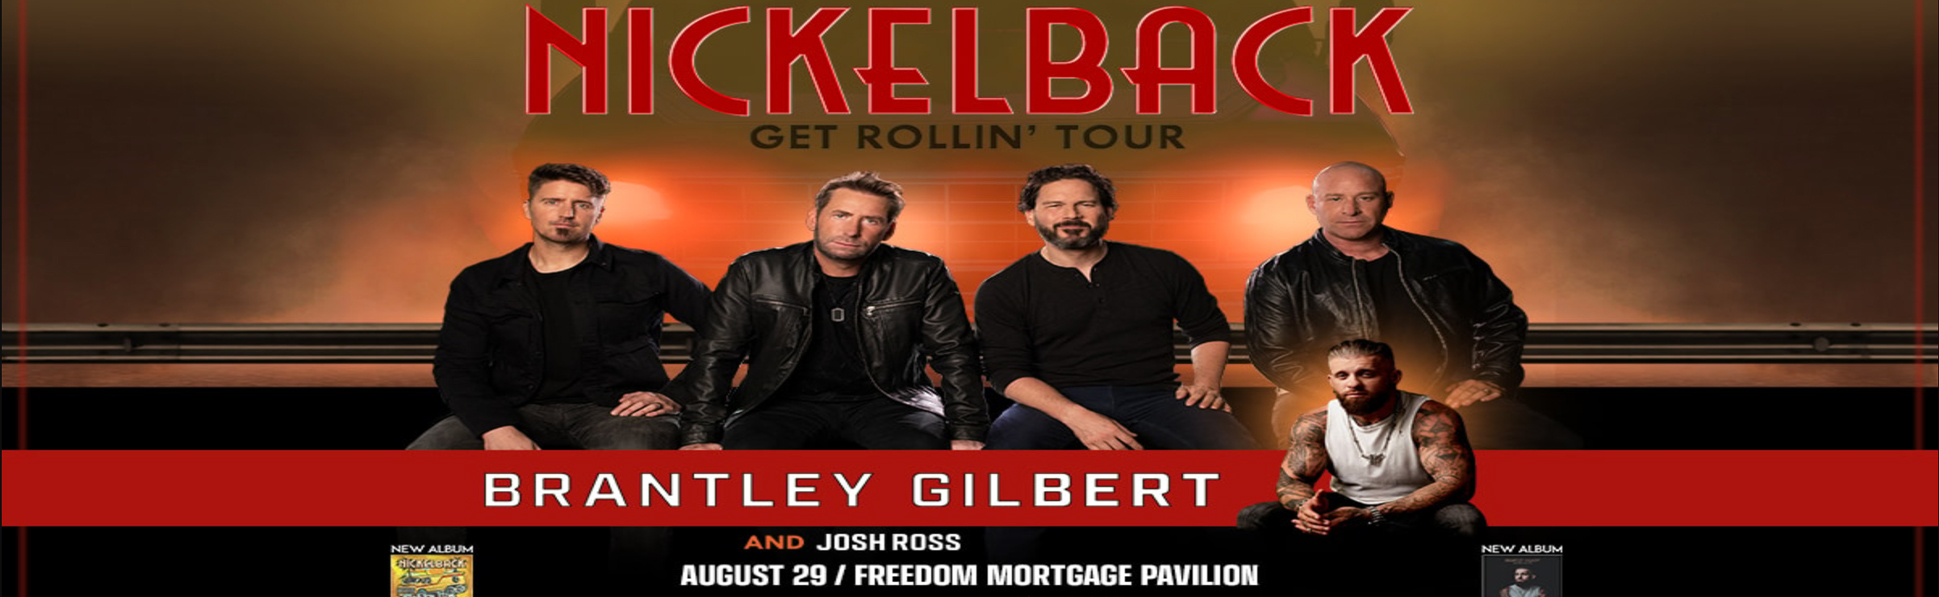 Nickelback, Brantley Gilbert & Josh Ross at Freedom Mortgage Pavilion